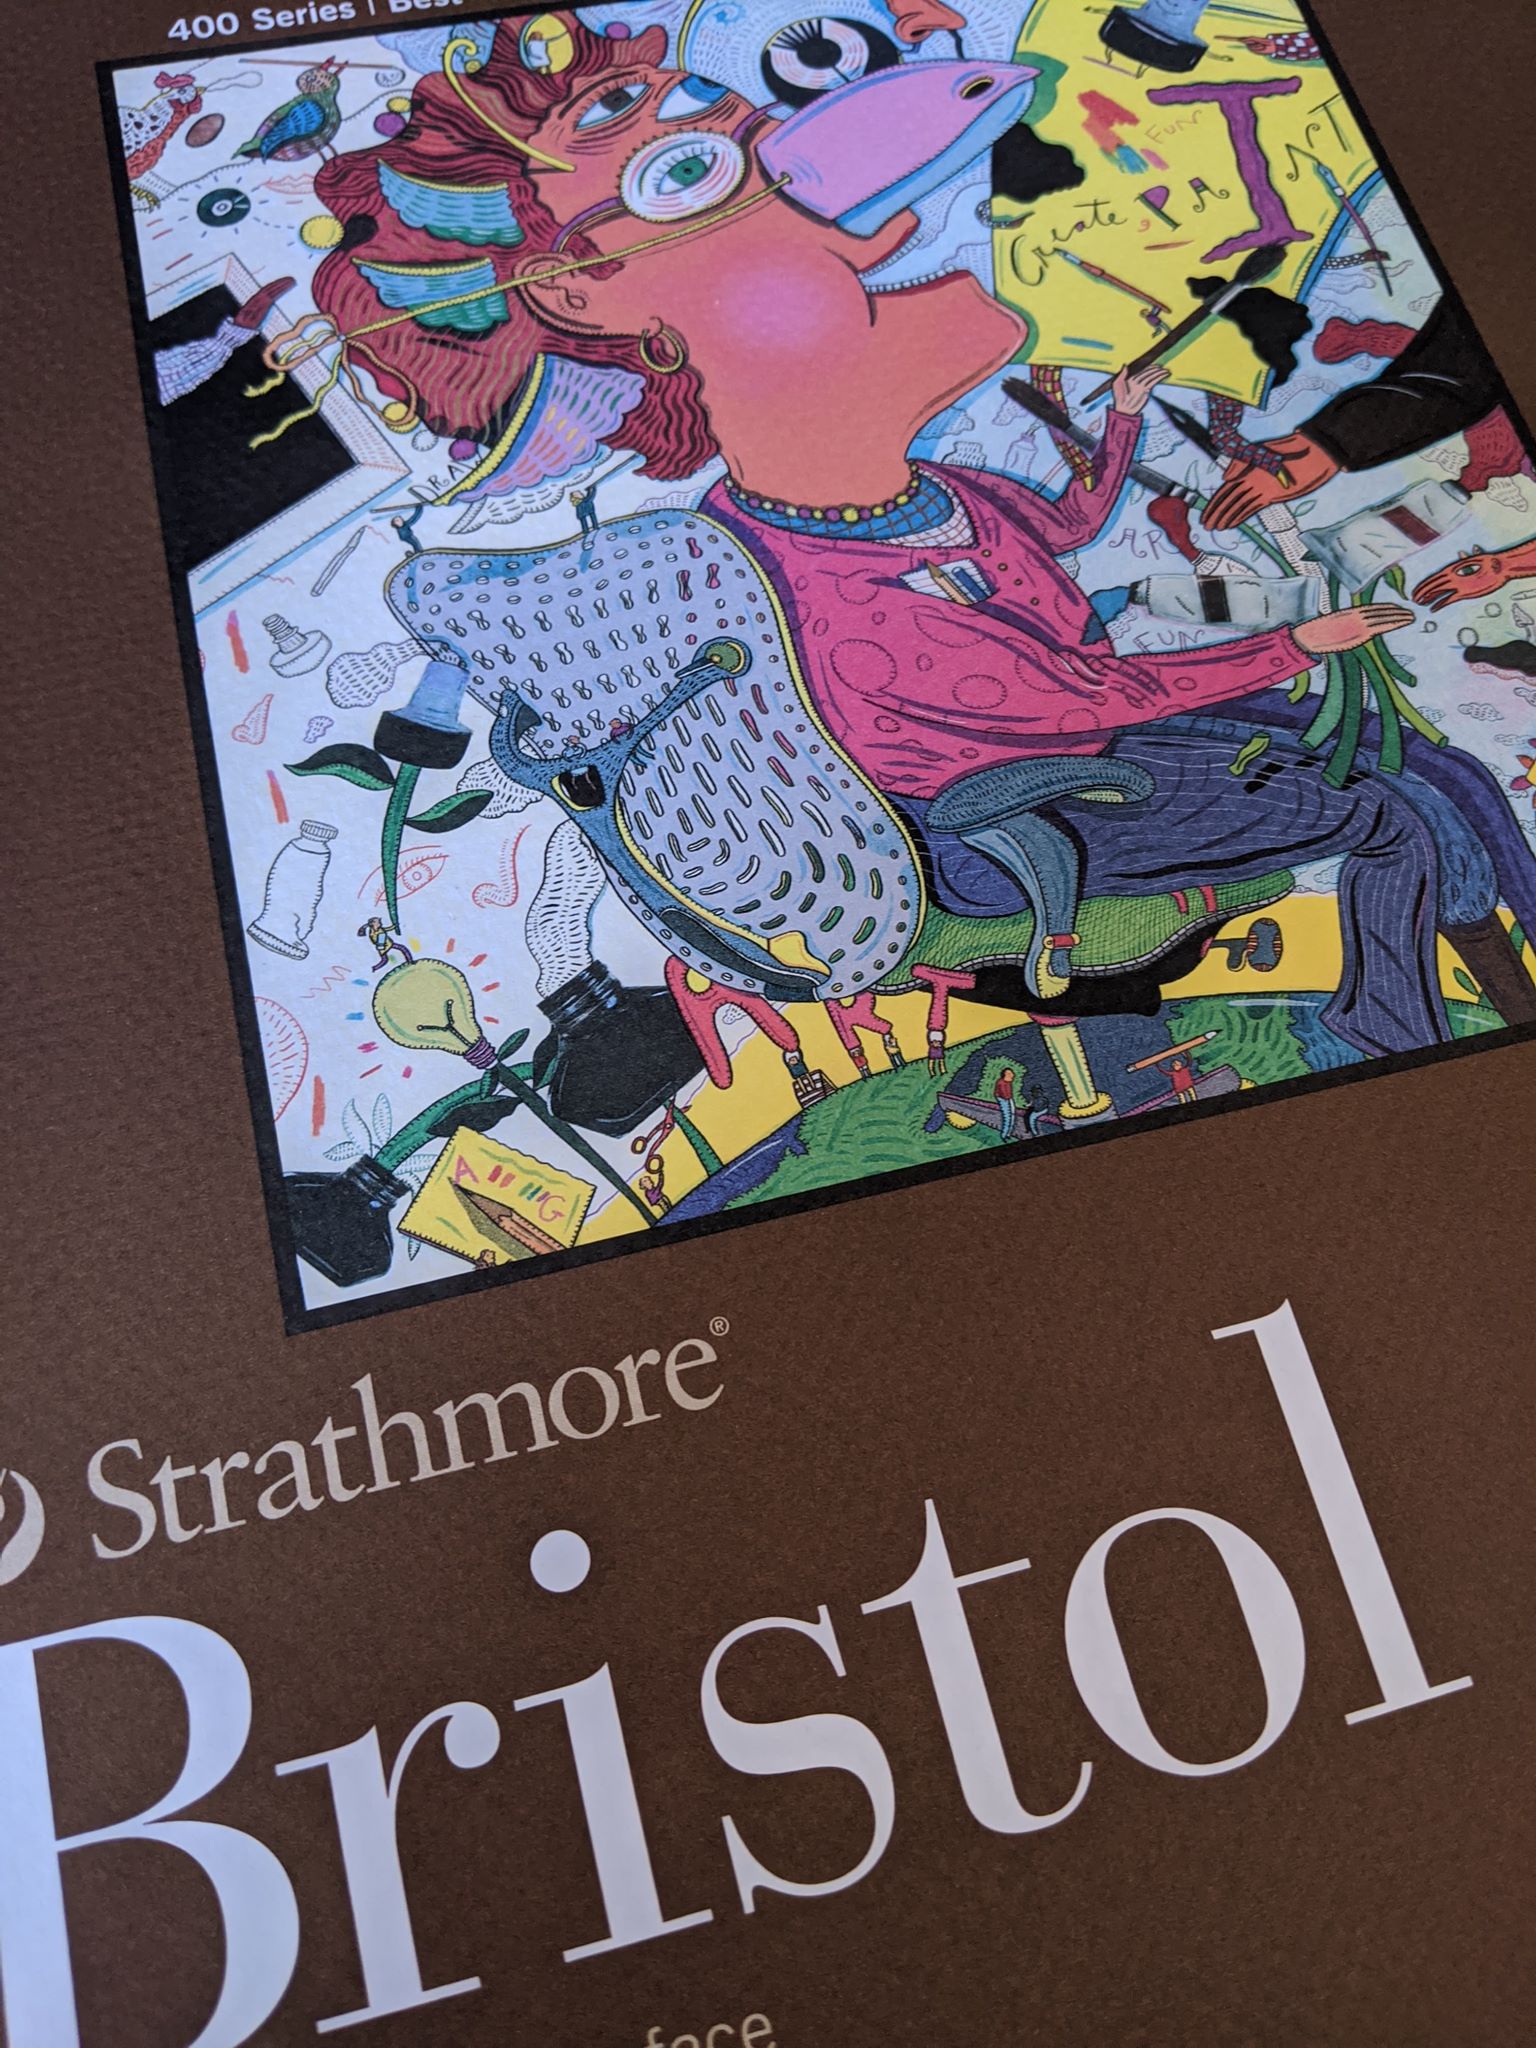 Strathmore 400 Series, Bristol Paper : 11 x 14" ( 27.9 x 35.6cm) : 15 sheets Vellum